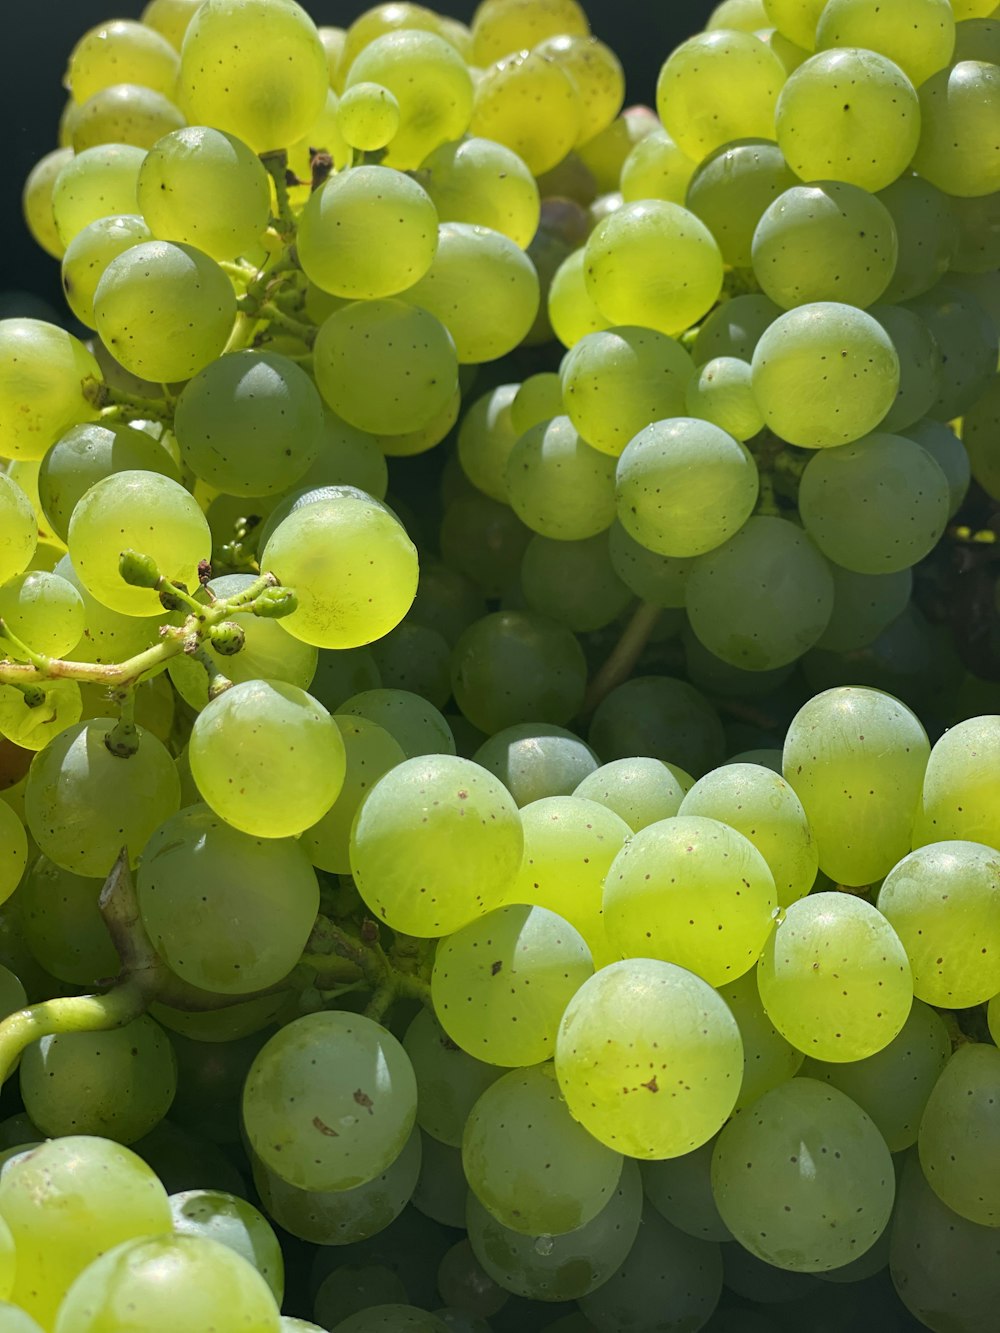 Un primer plano de un racimo de uvas verdes